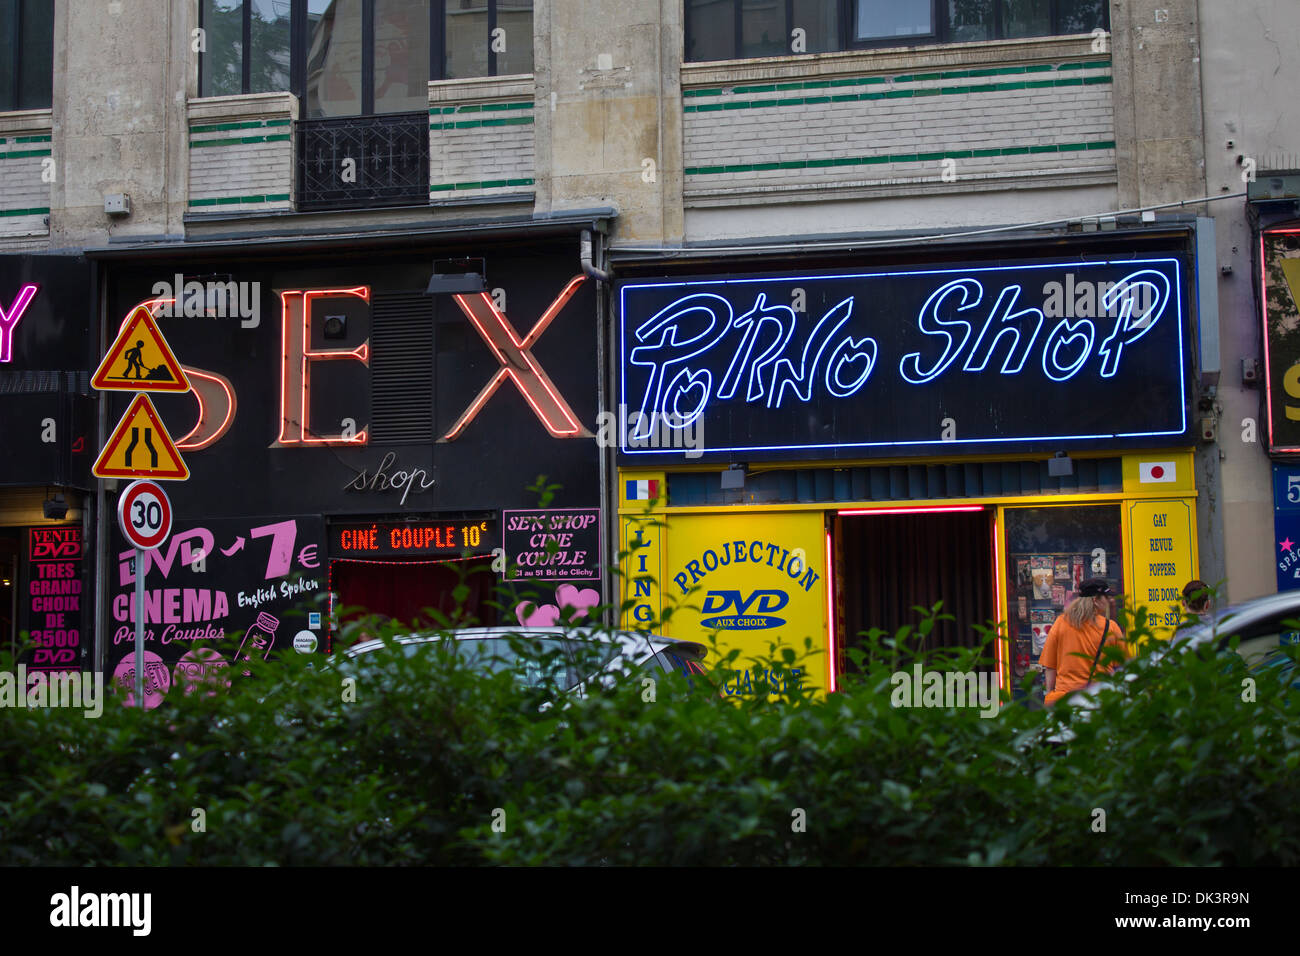 Porno Français Shop - Sexe et Porno Shop sur le Boulevard de Clichy, Paris Photo Stock photo photo